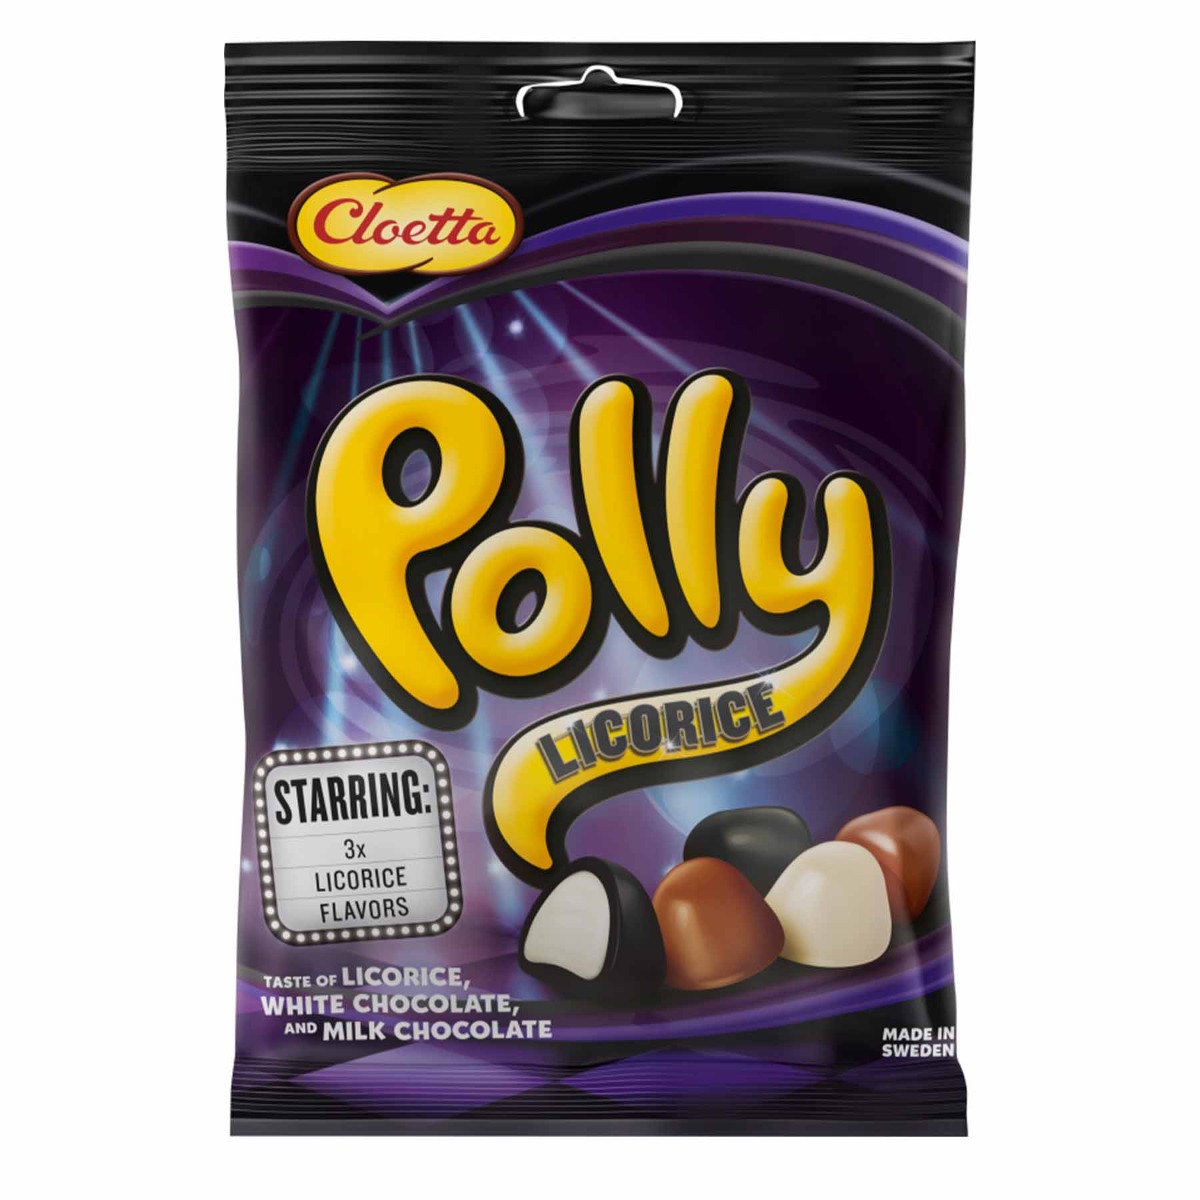 Godispåse Polly licorice 100 g